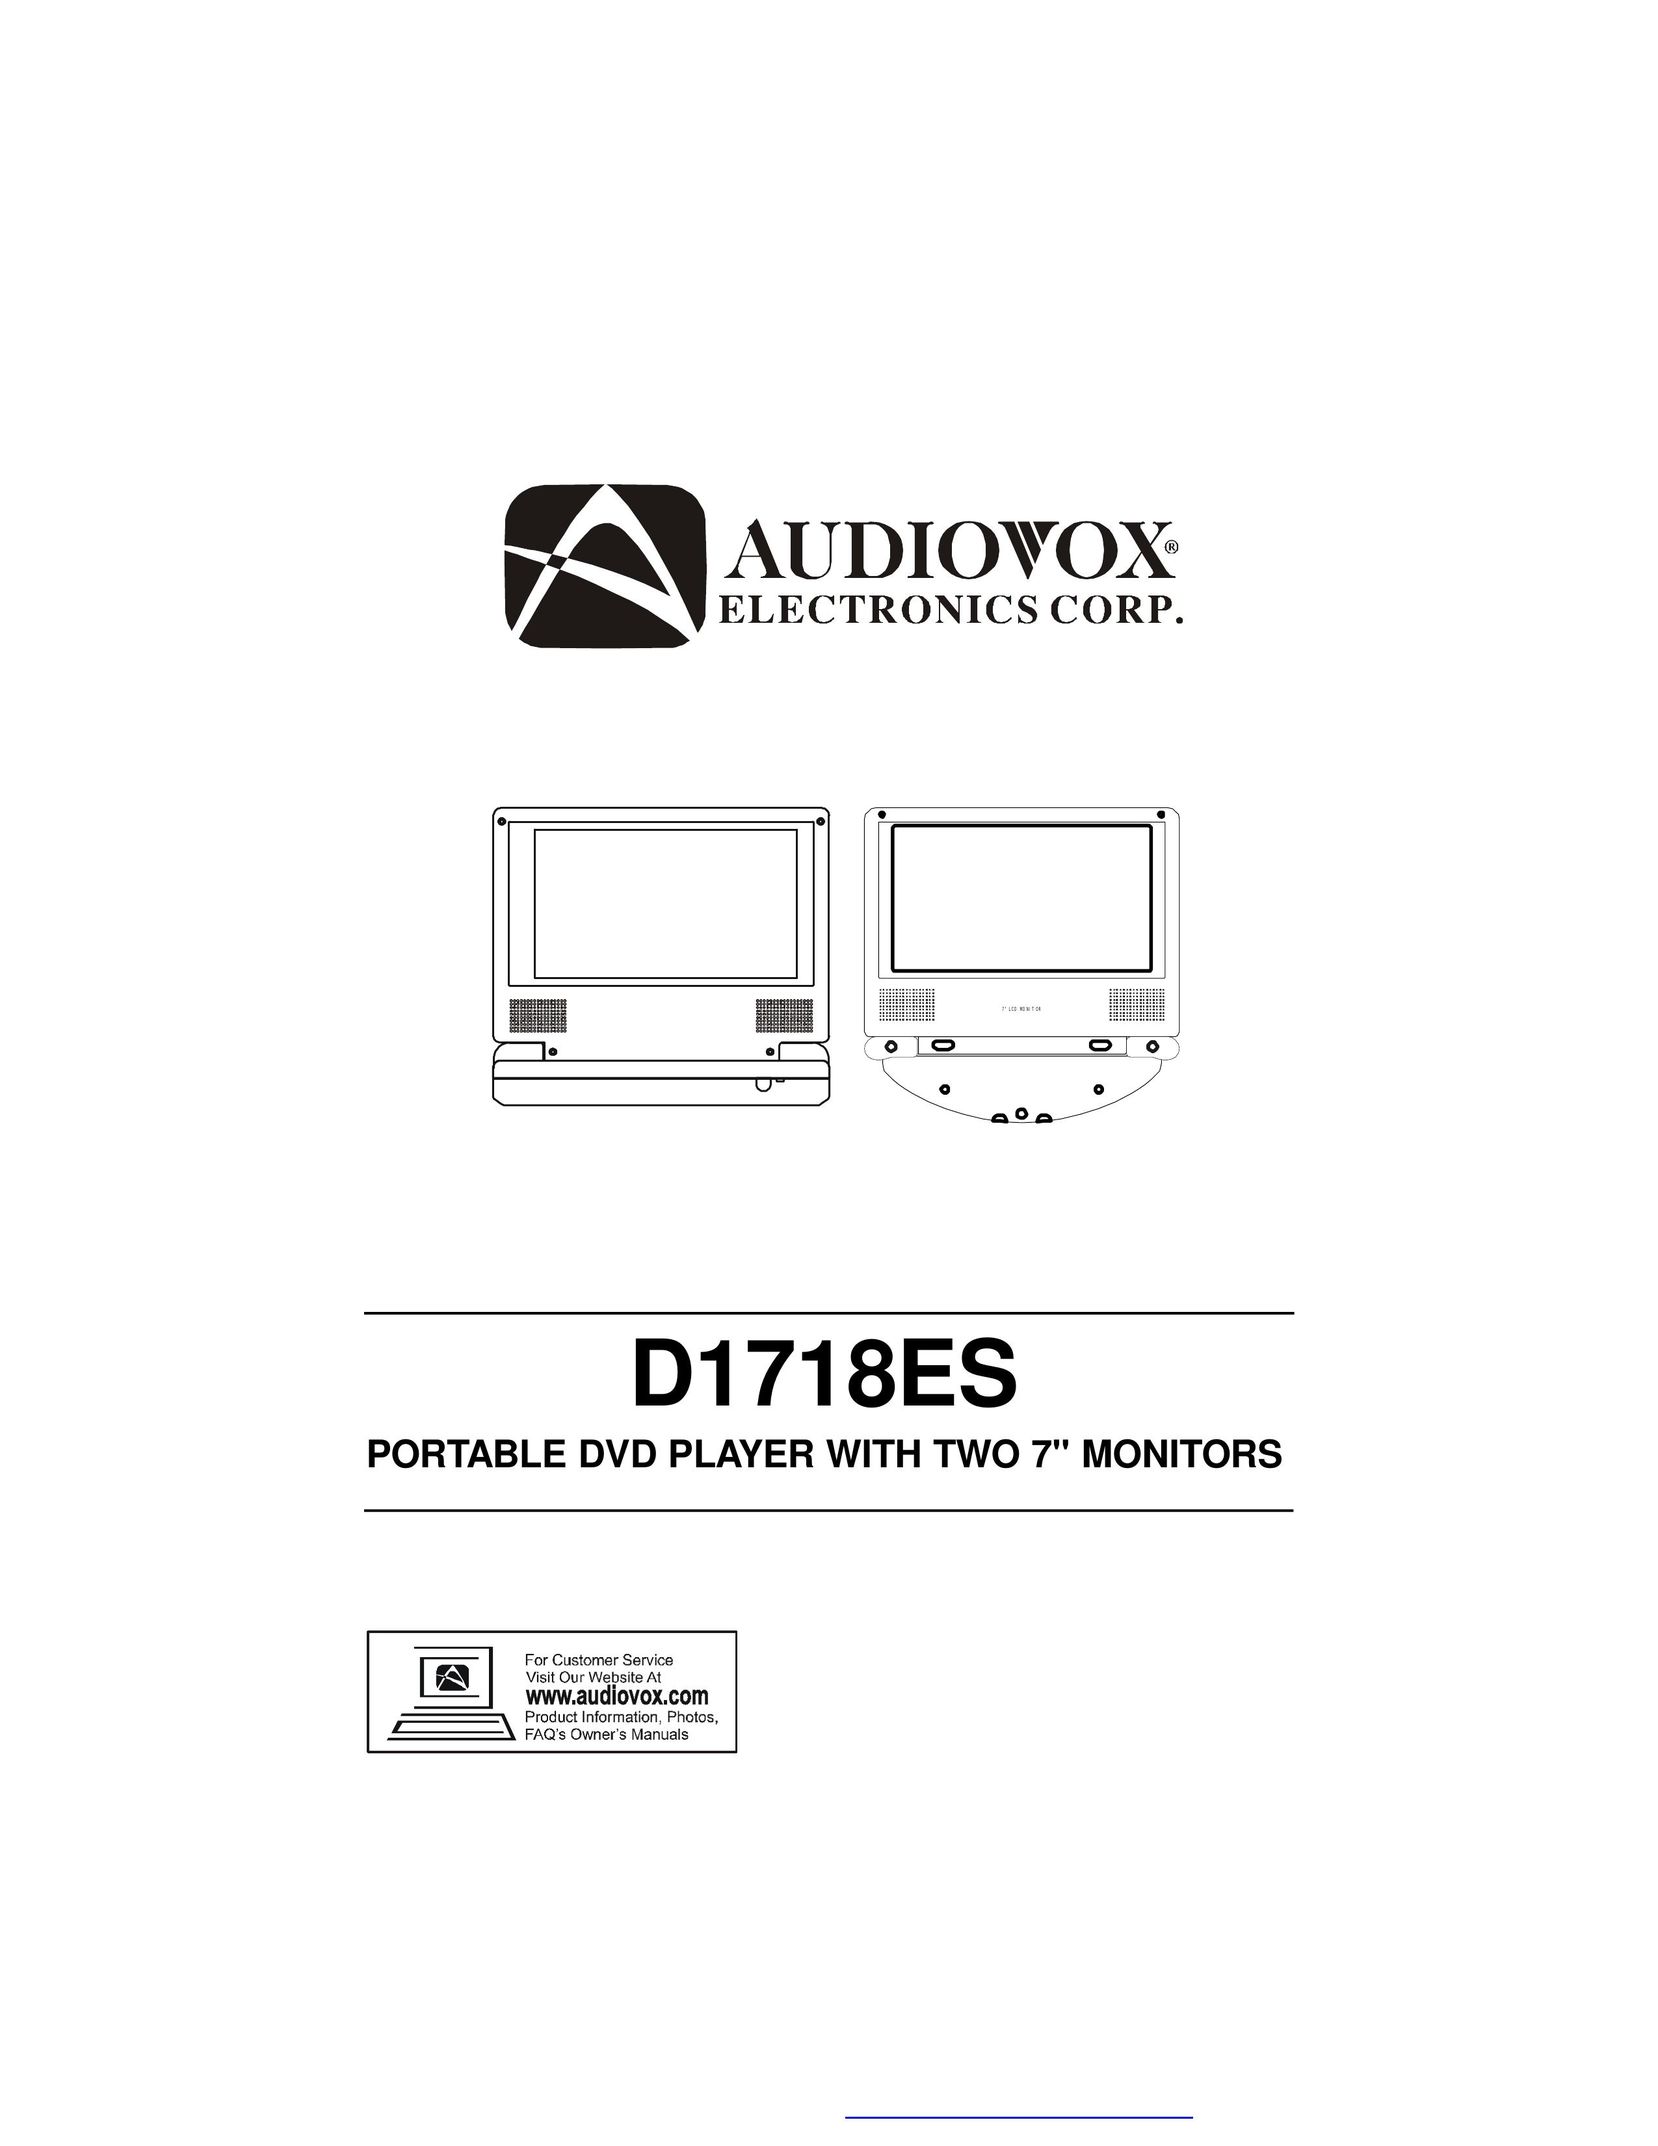 Audiovox D1718ES DVD Player User Manual